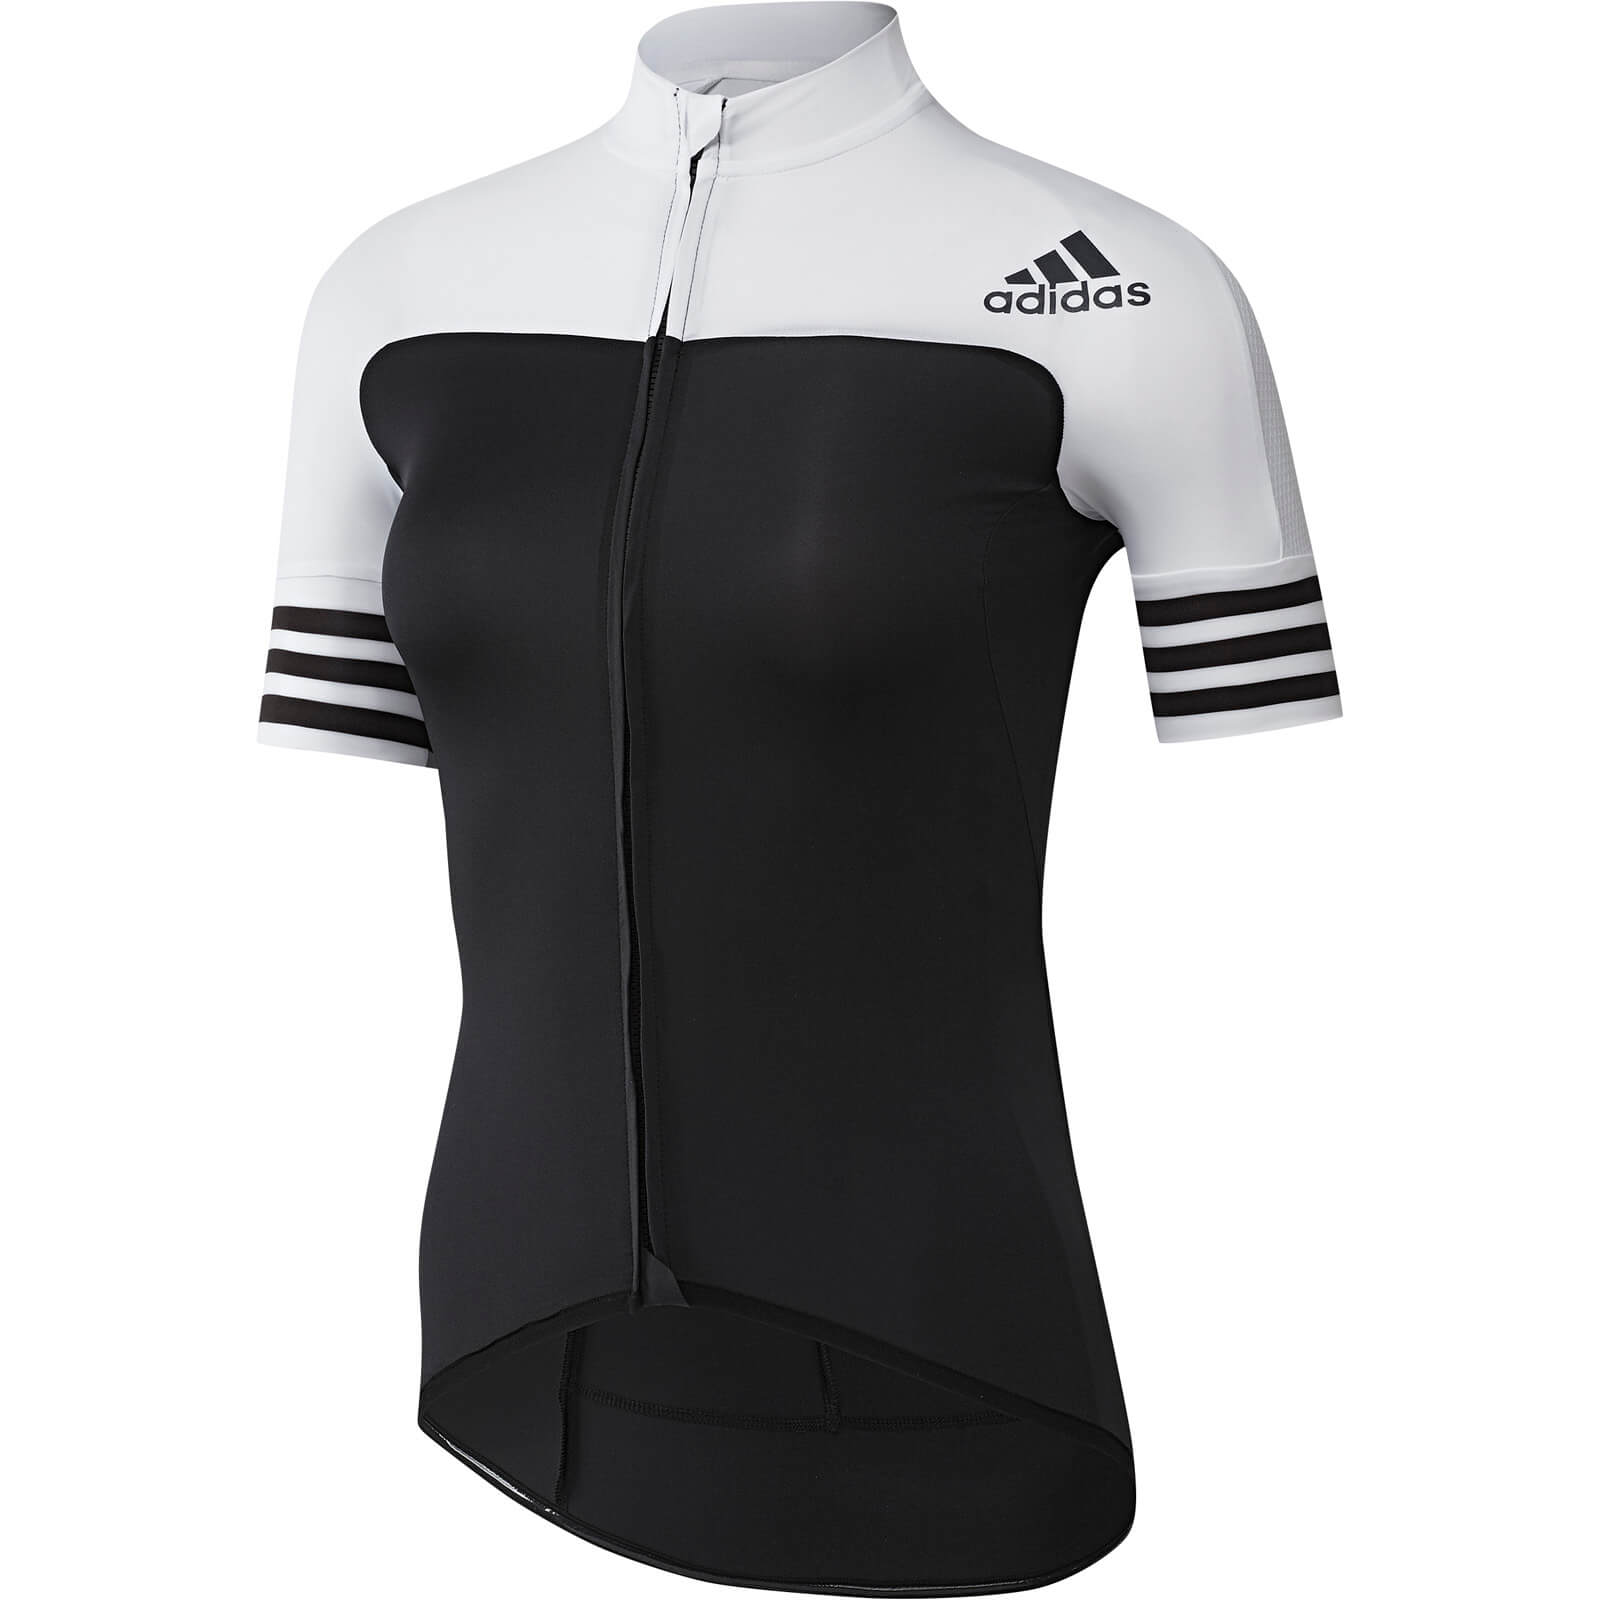 adidas women's cycling clothing off 67% - medpharmres.com